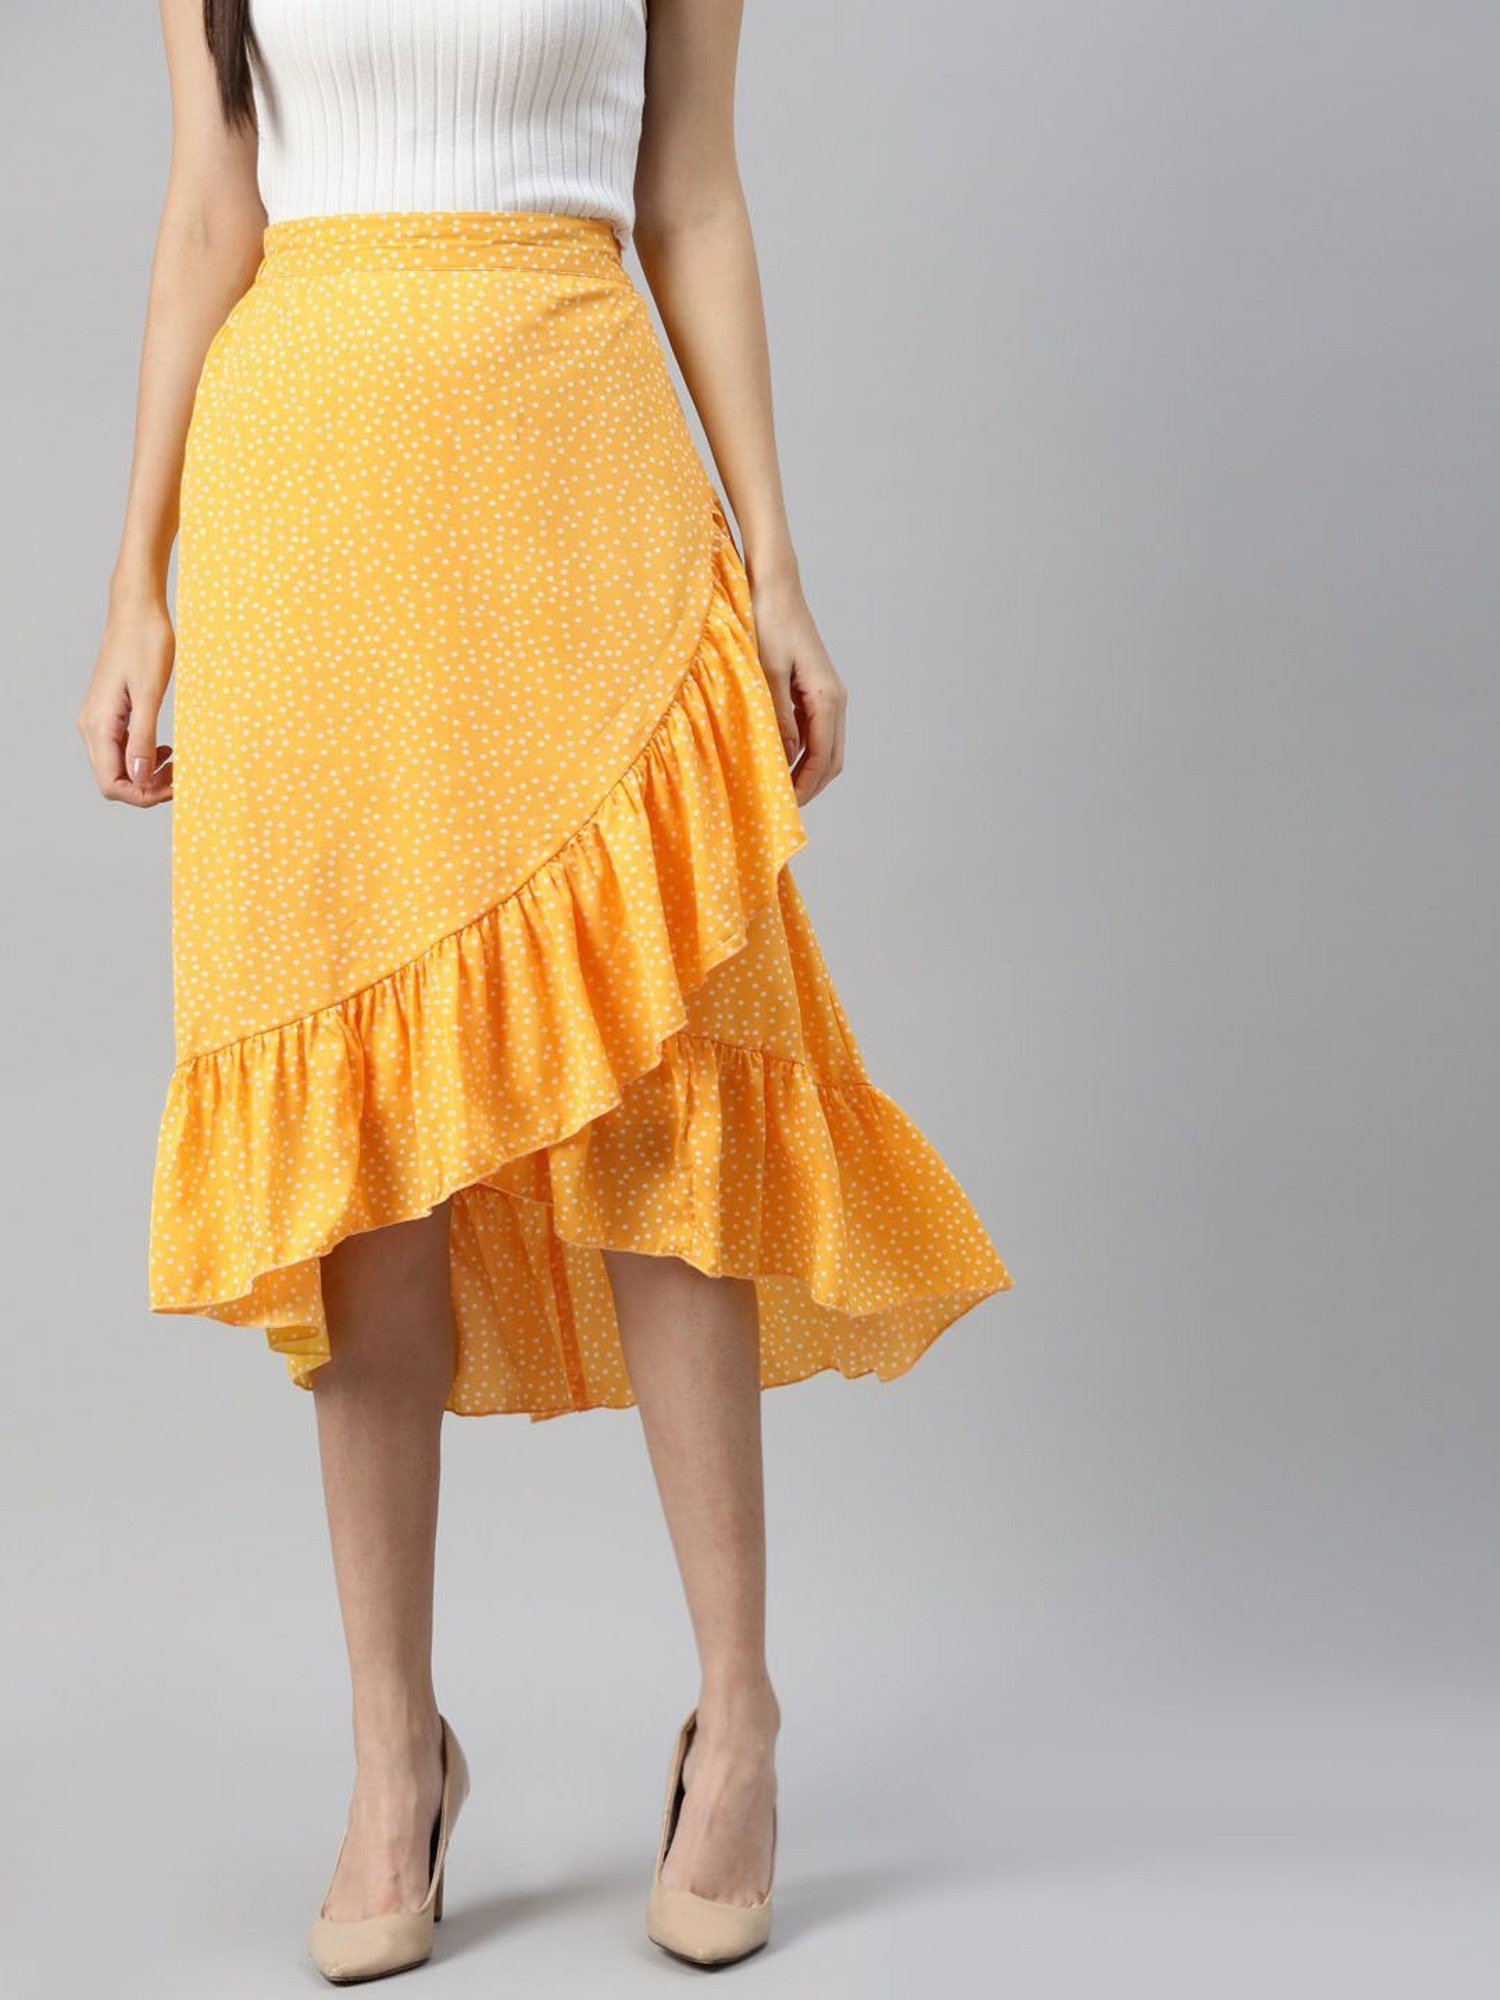 Aggregate more than 73 yellow midi skirt latest